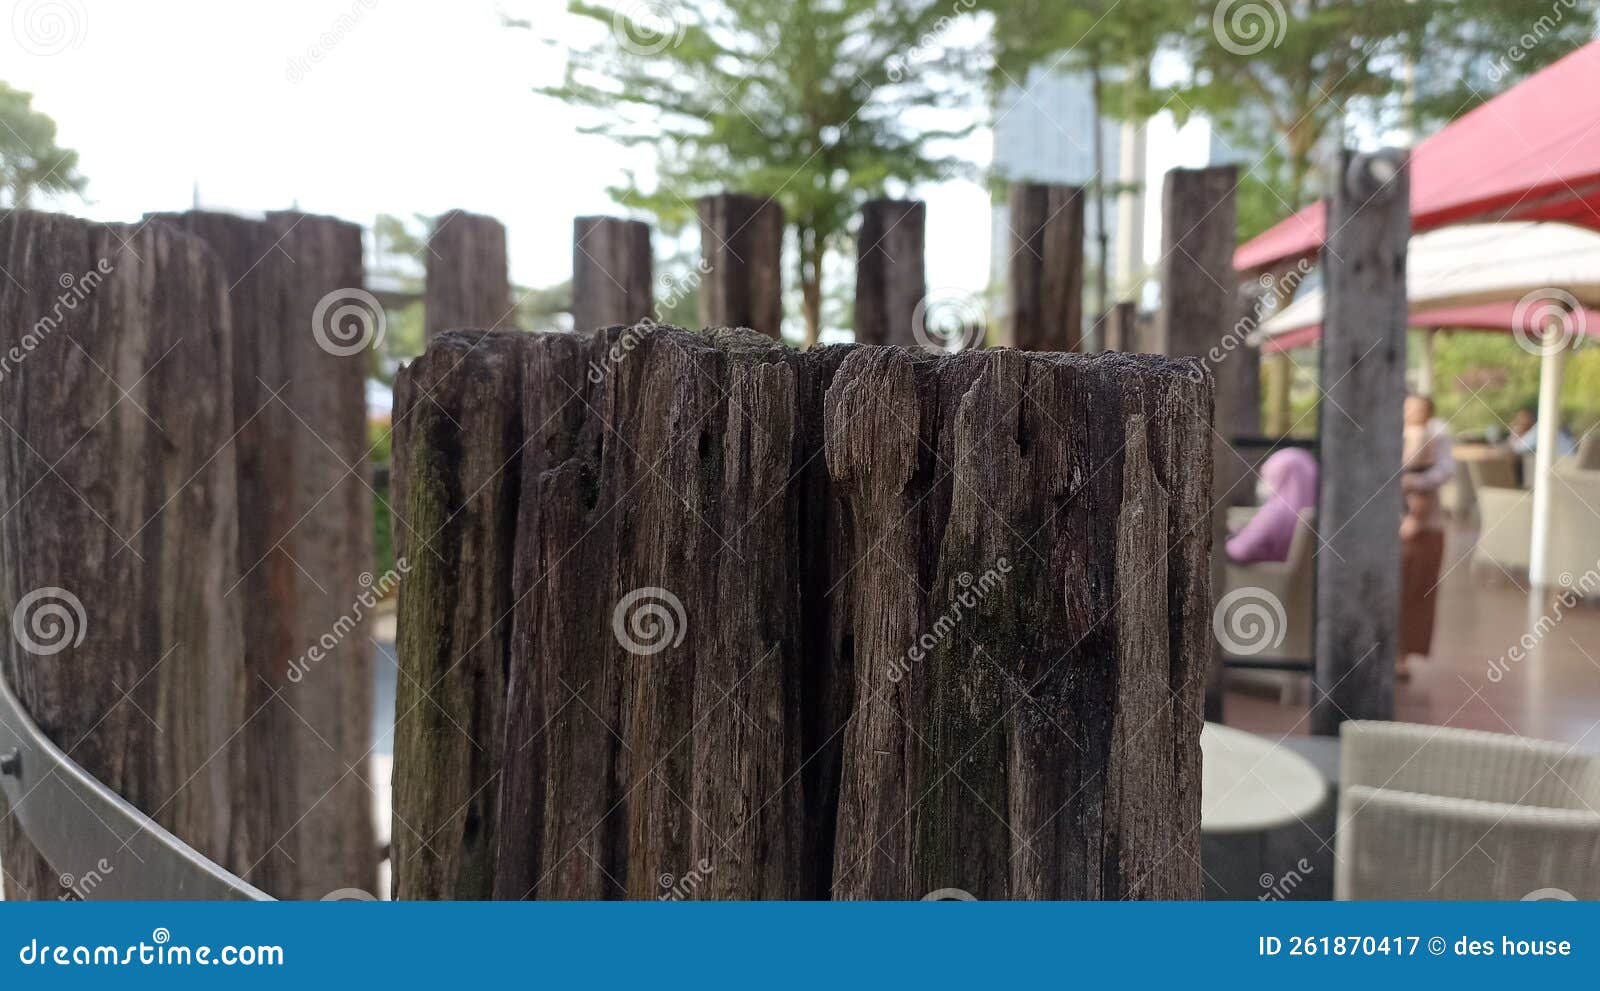 wood pagar garden park tree